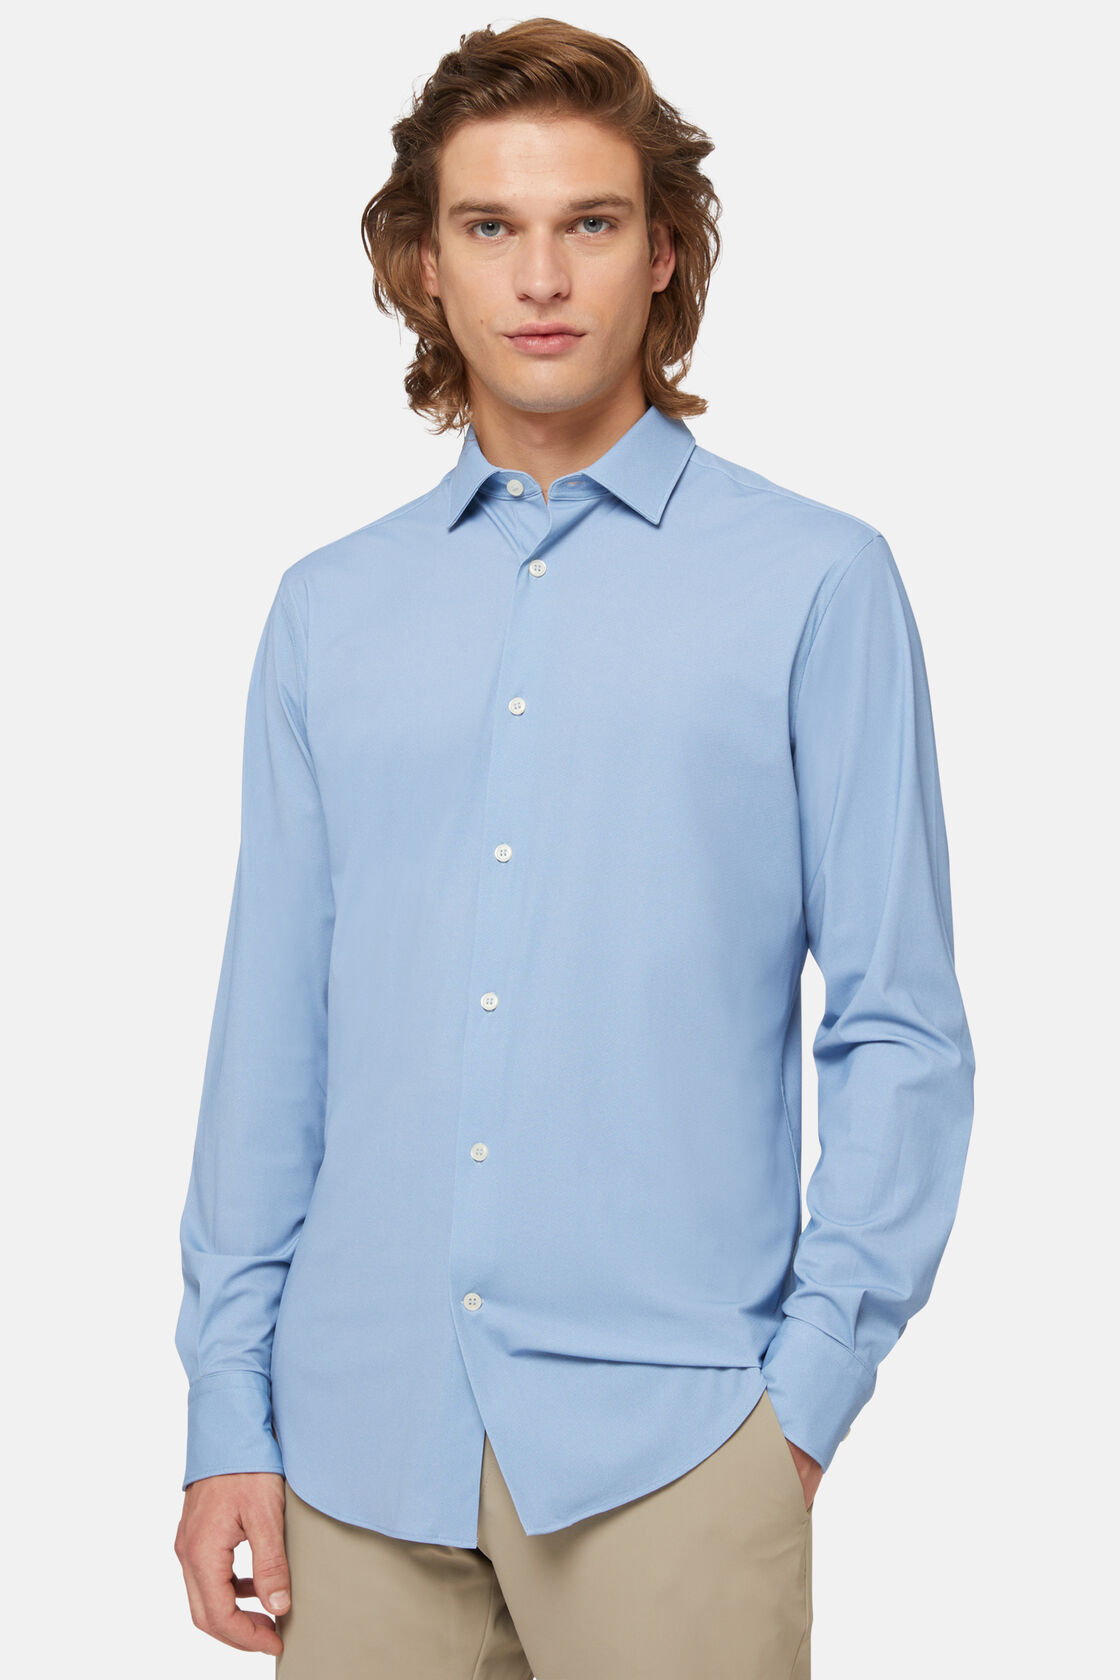 Camisa de nylon elástico azul de ajuste slim, Medium Blue, hi-res